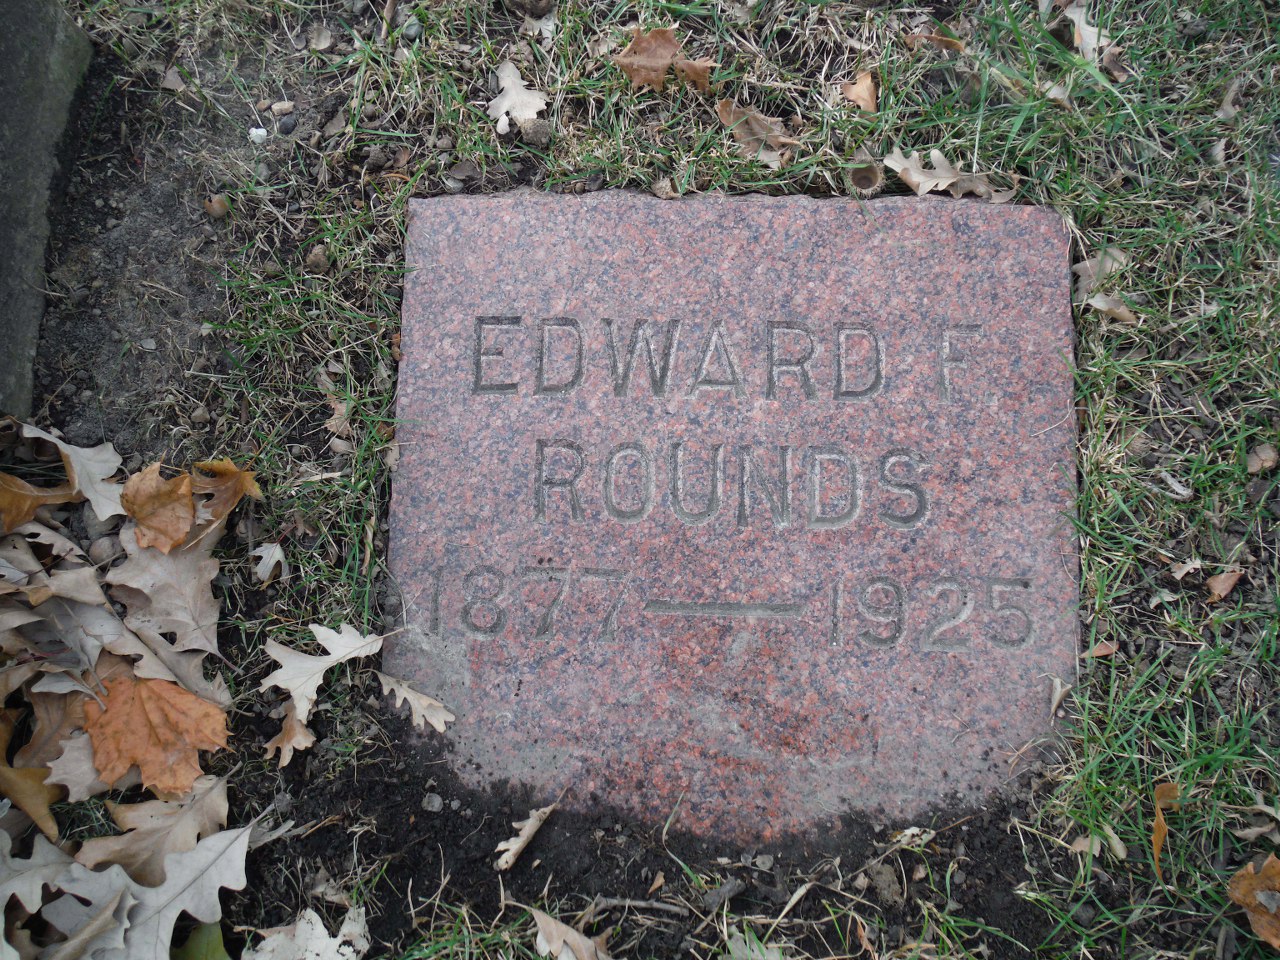 Edward F. Rounds headstone